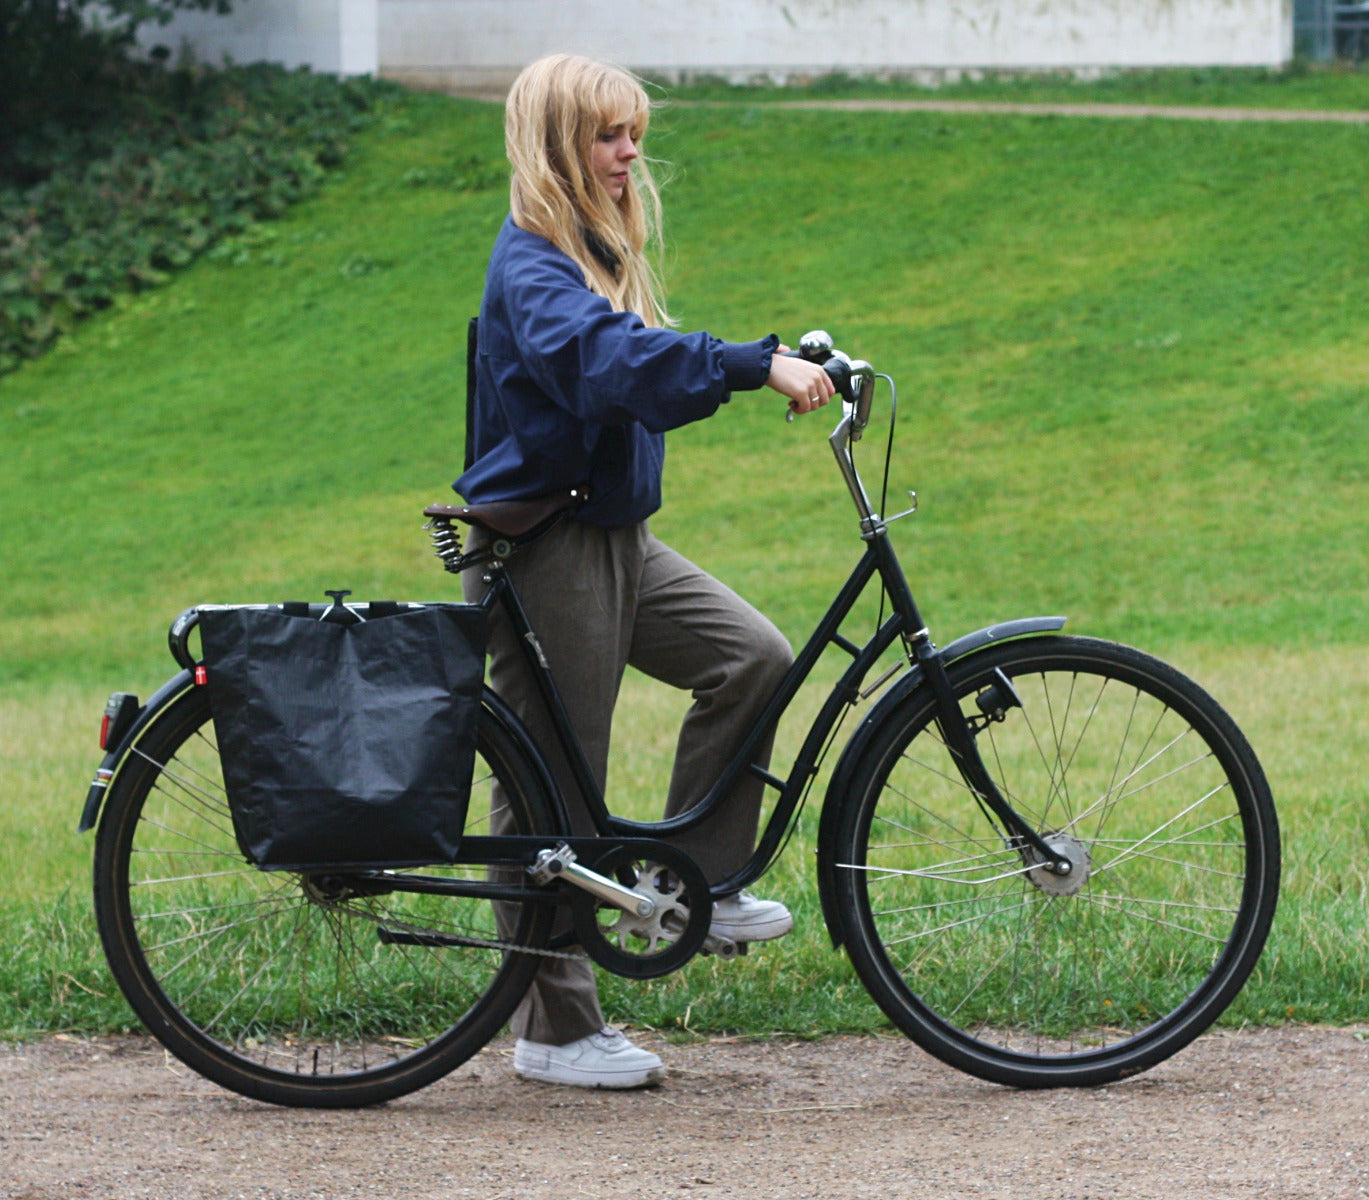 COBAGS - Bikezac 2.0 - Fahrradtasche